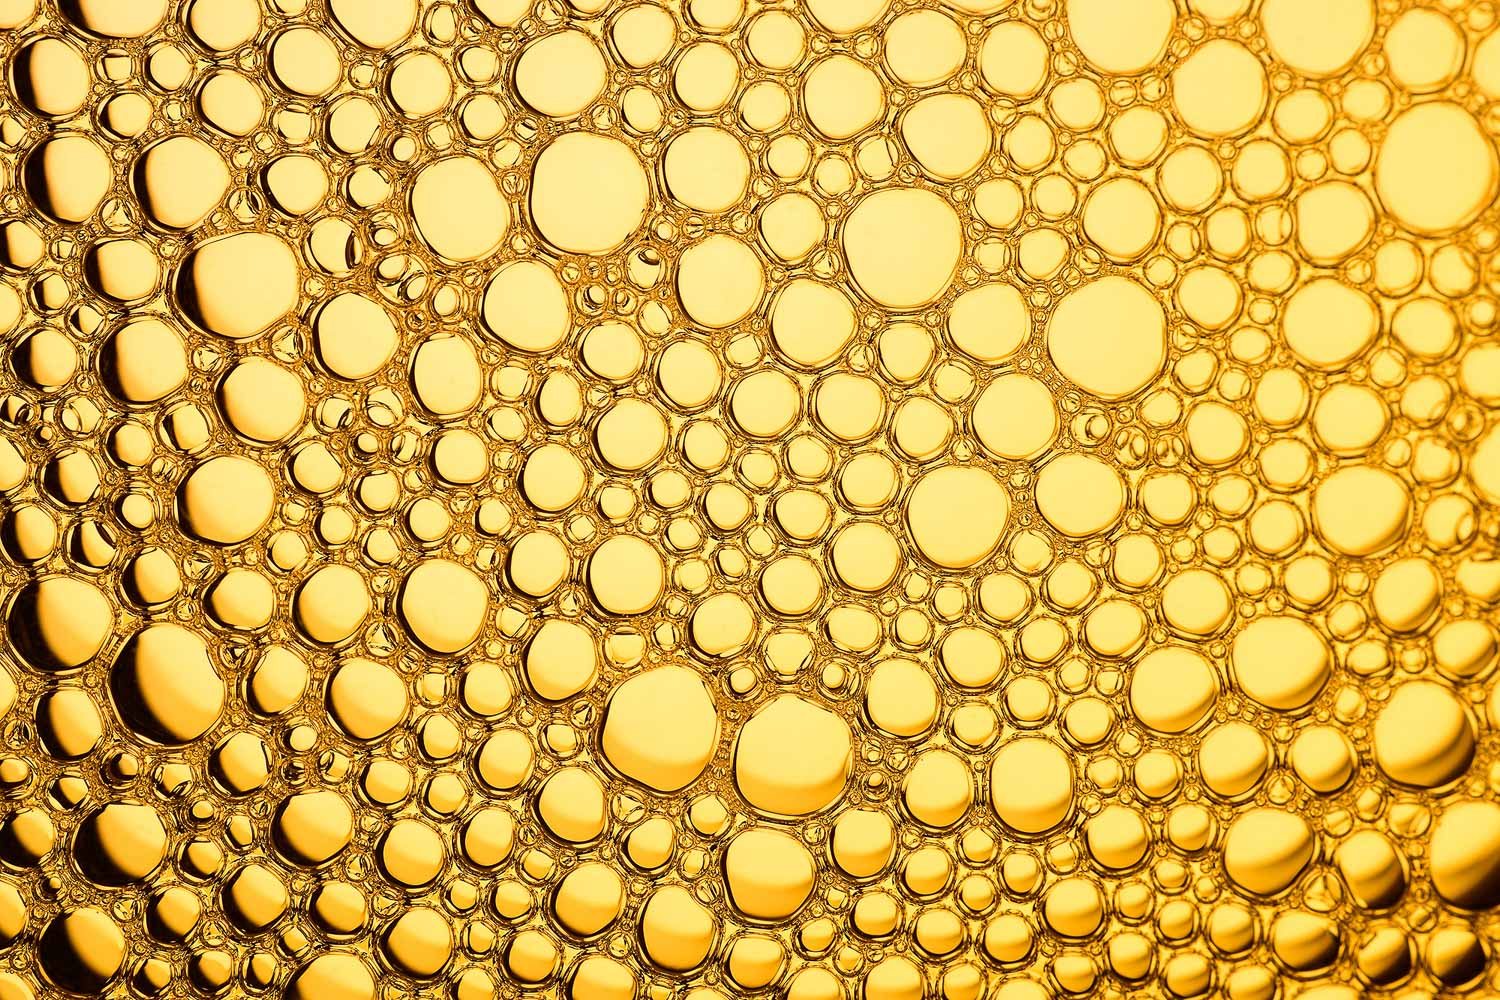 Yellow bubbles